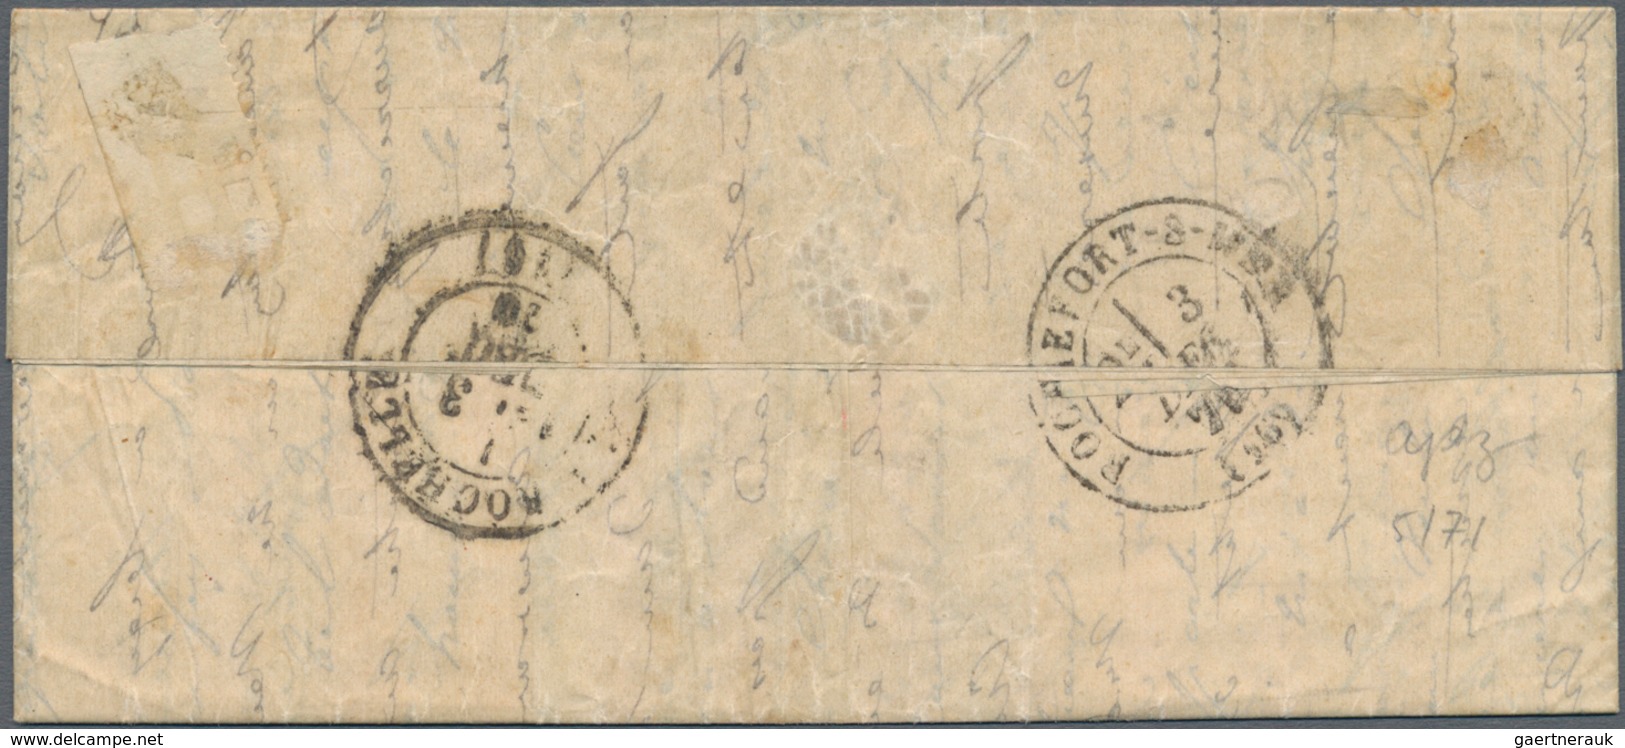 Frankreich - Ballonpost: 1870 BALLON MONTÉ: Small Folded Letter Sent From Paris To Rochefort And Flo - 1960-.... Briefe & Dokumente